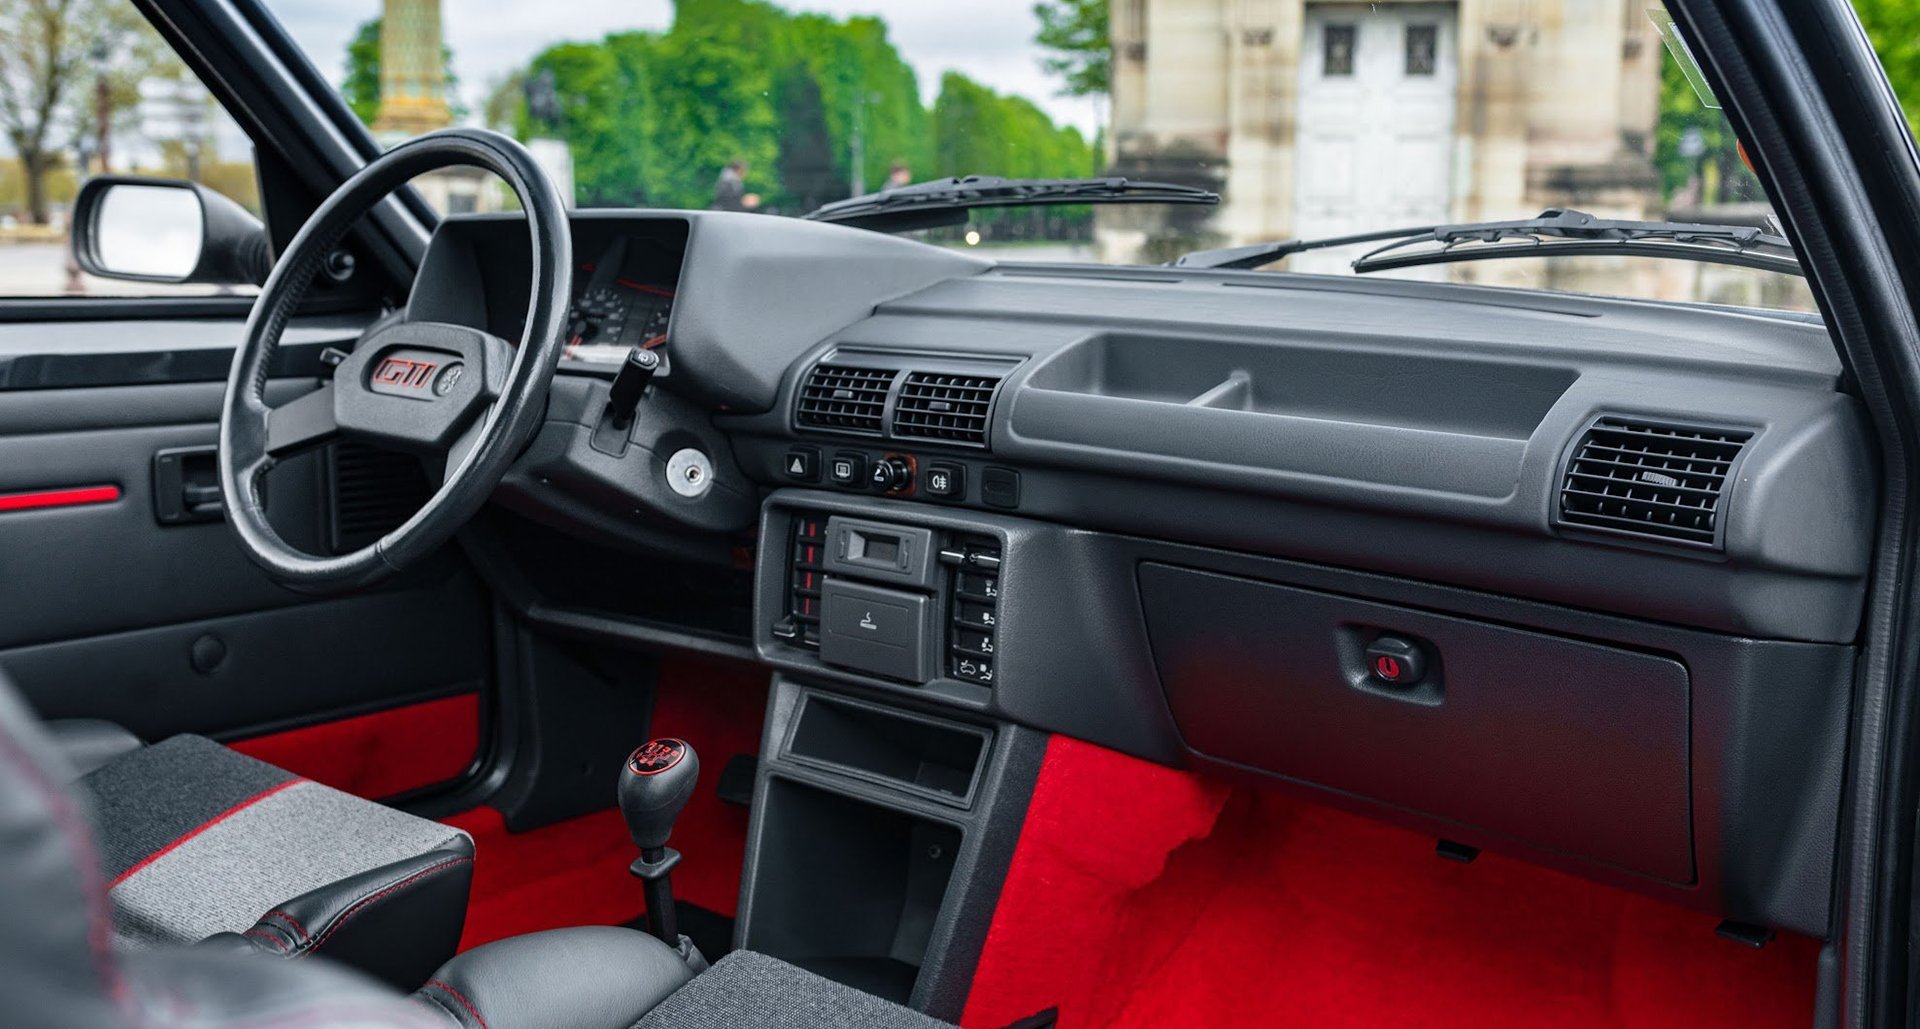 Peugeot 205 GTi Aguttes interior